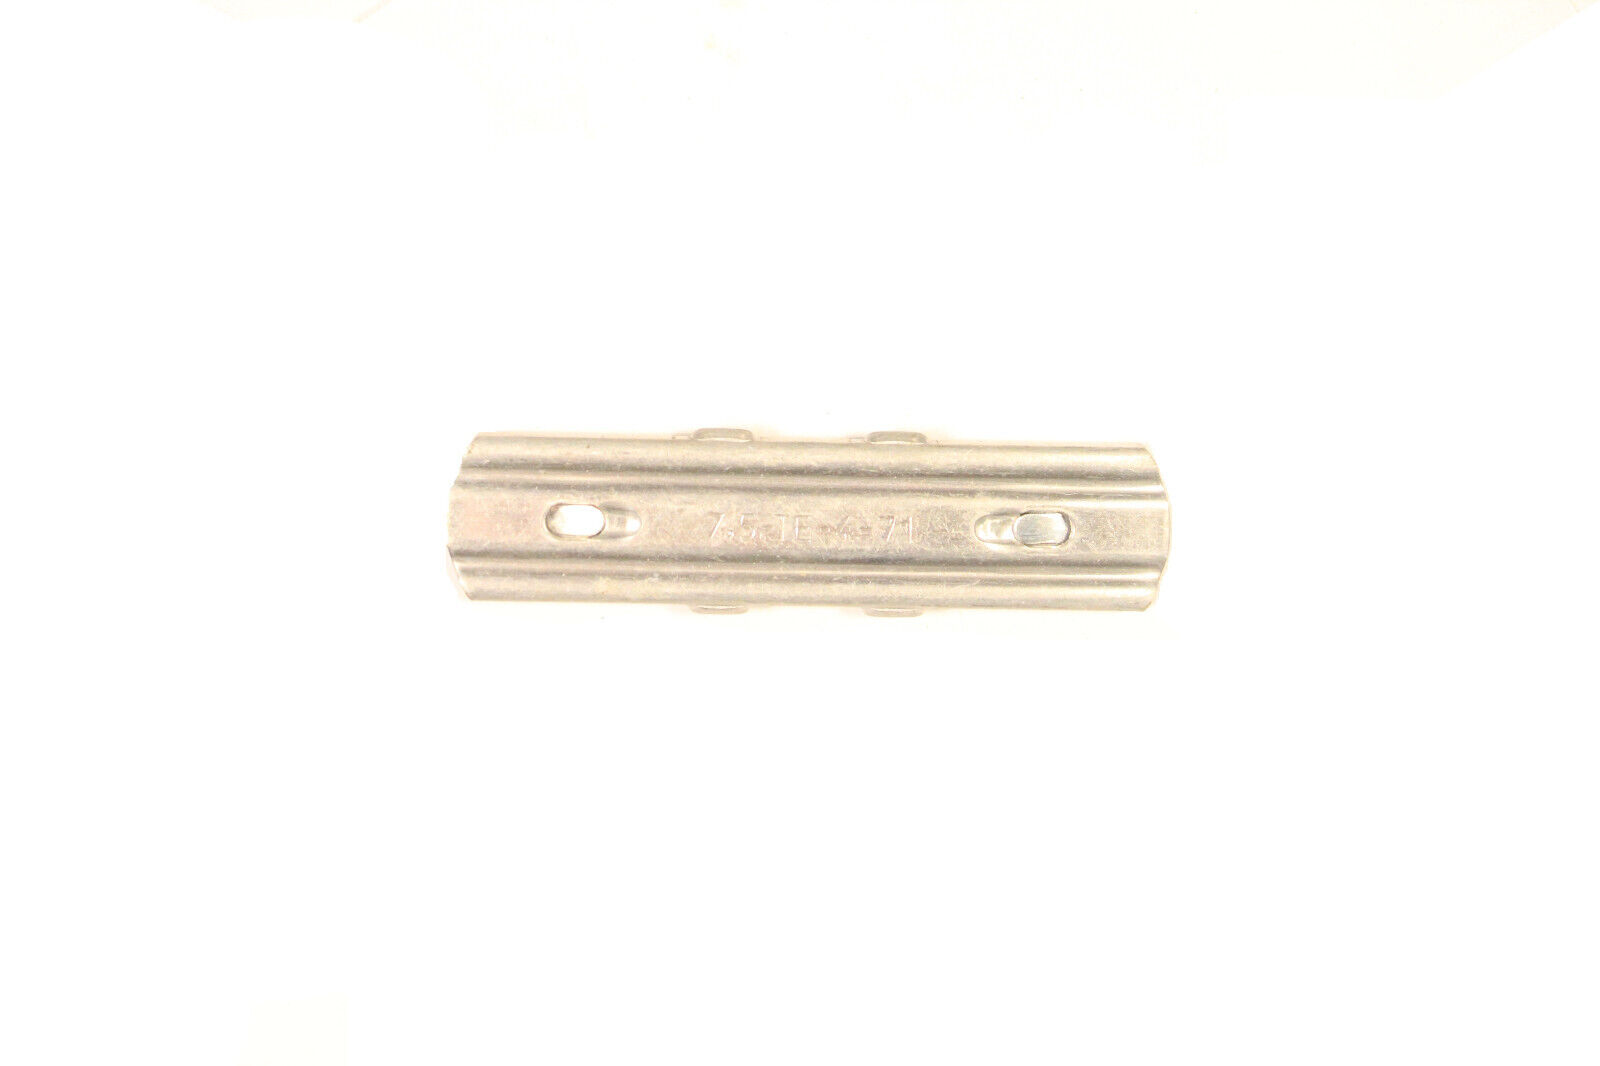 Mas 36 Mas 49 Mas 49/56 7.5x54 7.5mm French Aluminum Stripper Clip